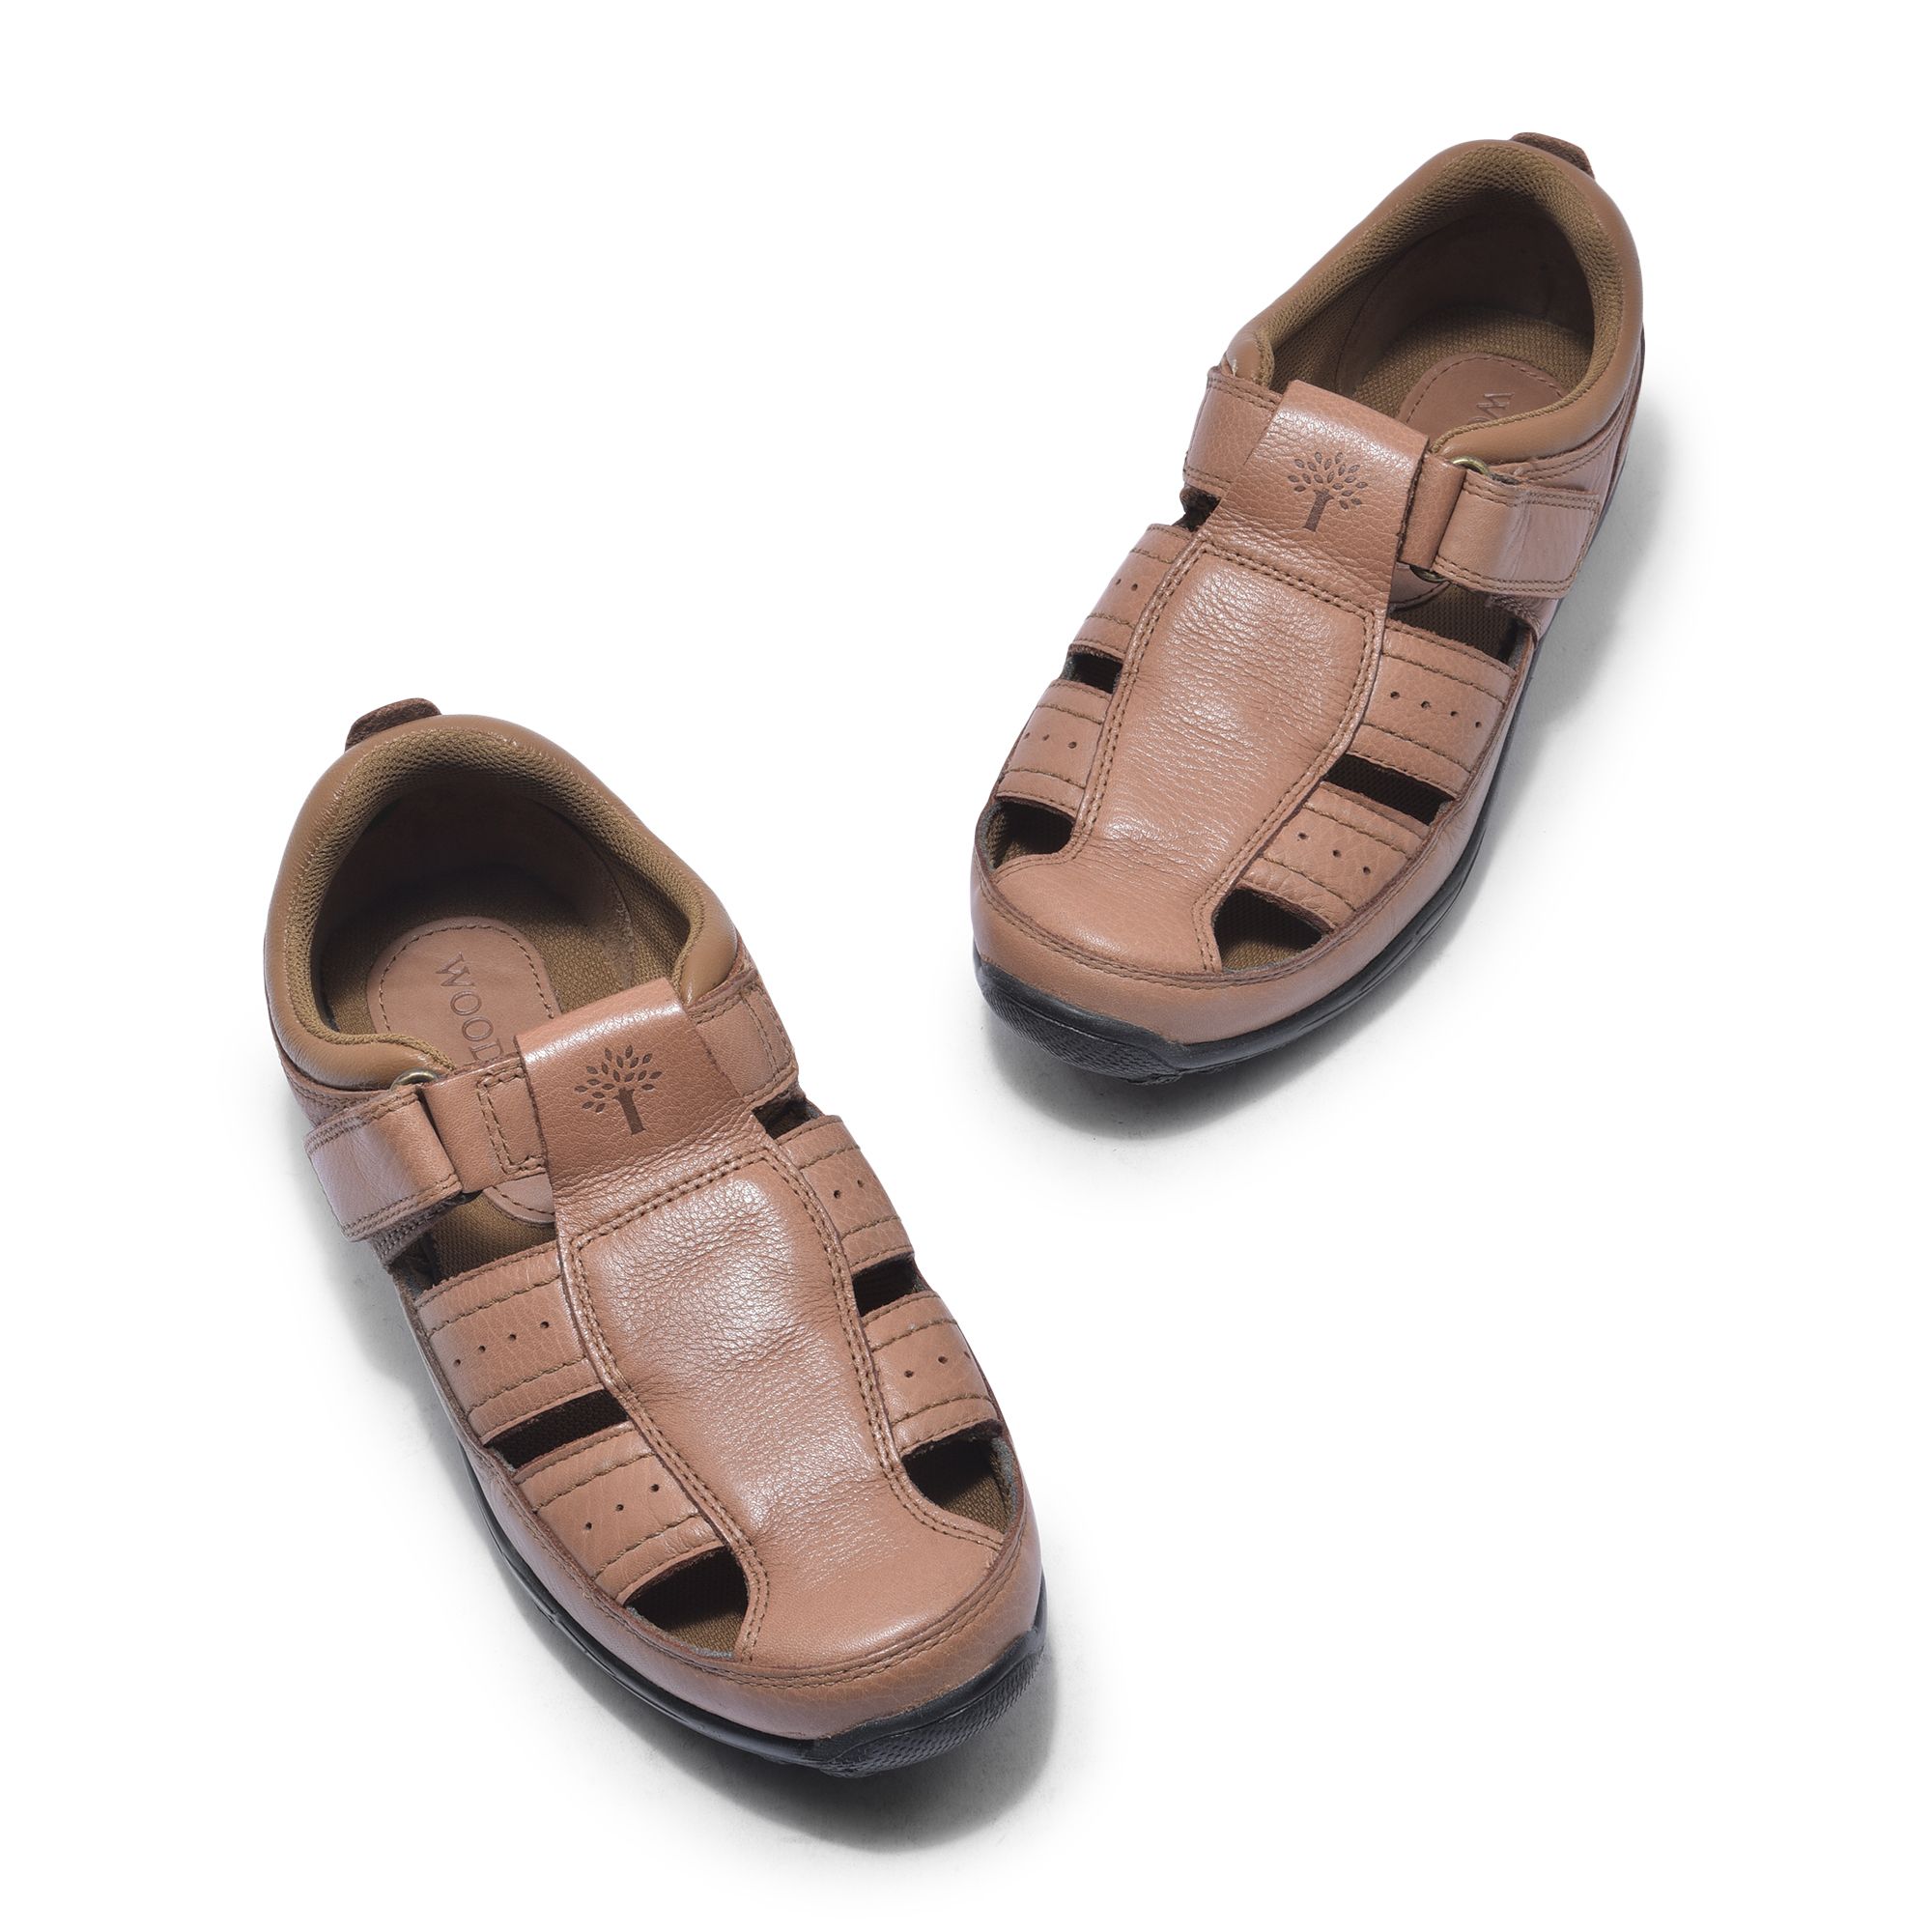 Woodland Leather Sandals for Men